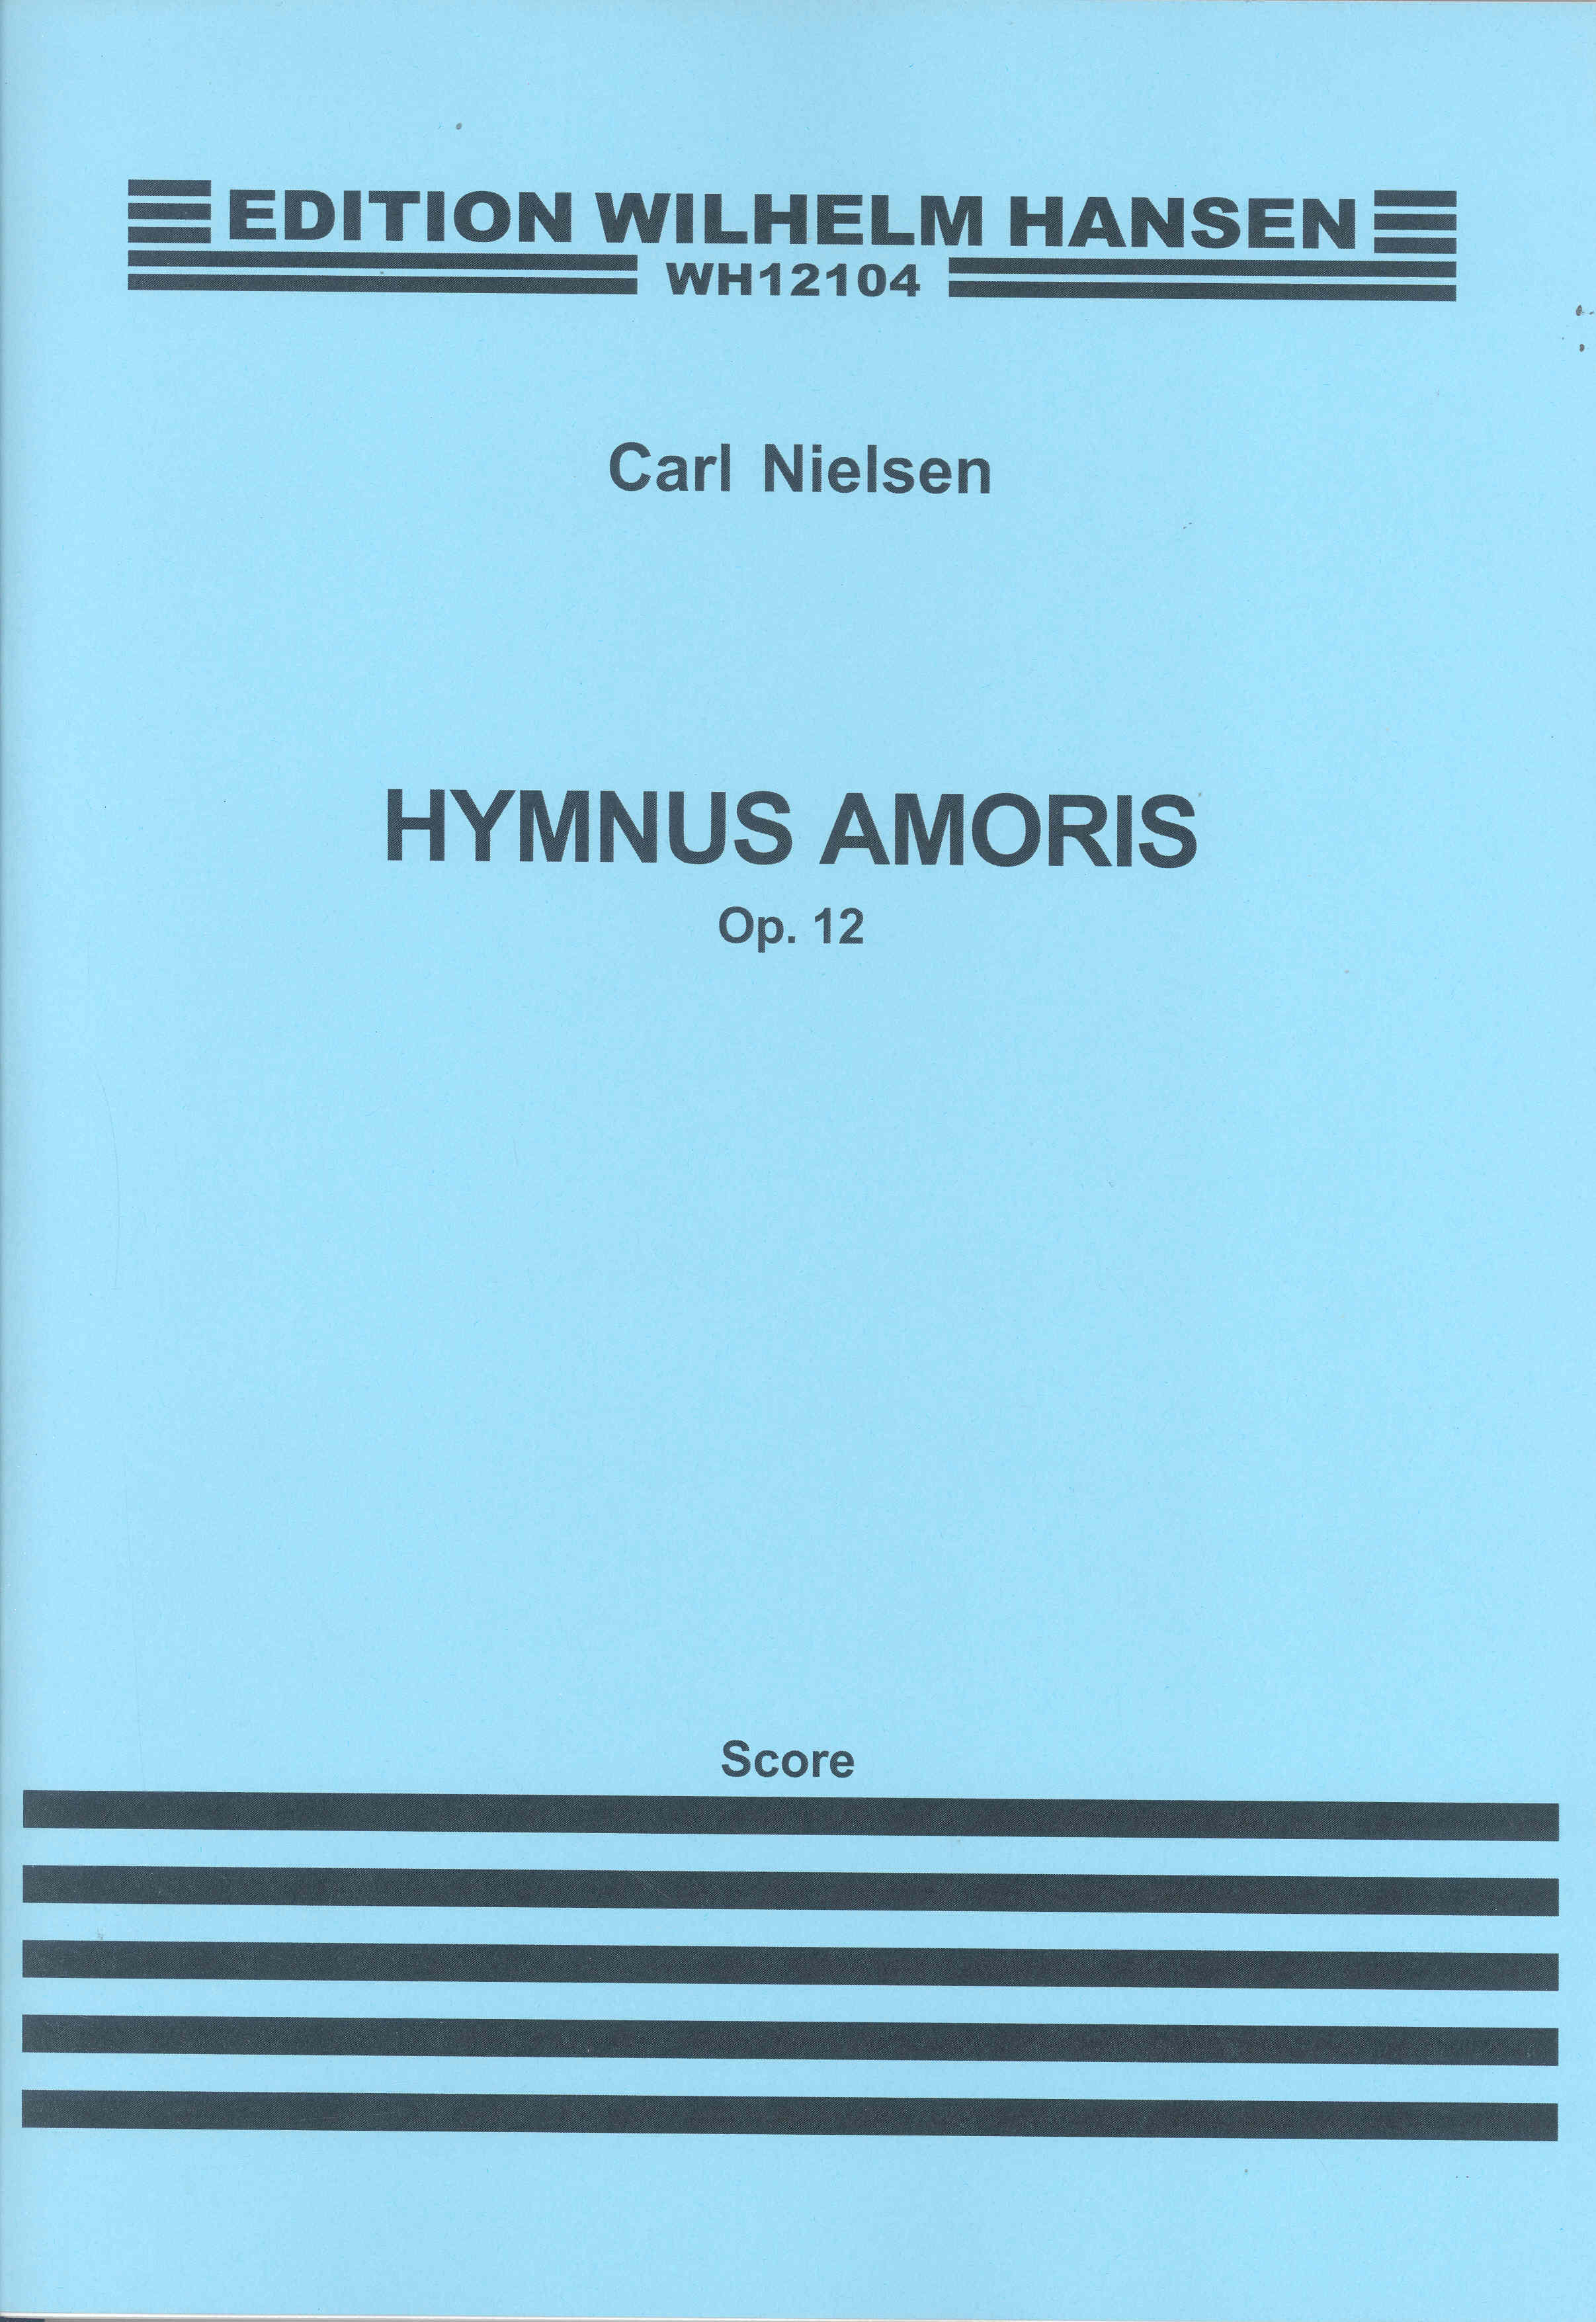 Nielsen Hymnus Amoris Vocal Score Sheet Music Songbook